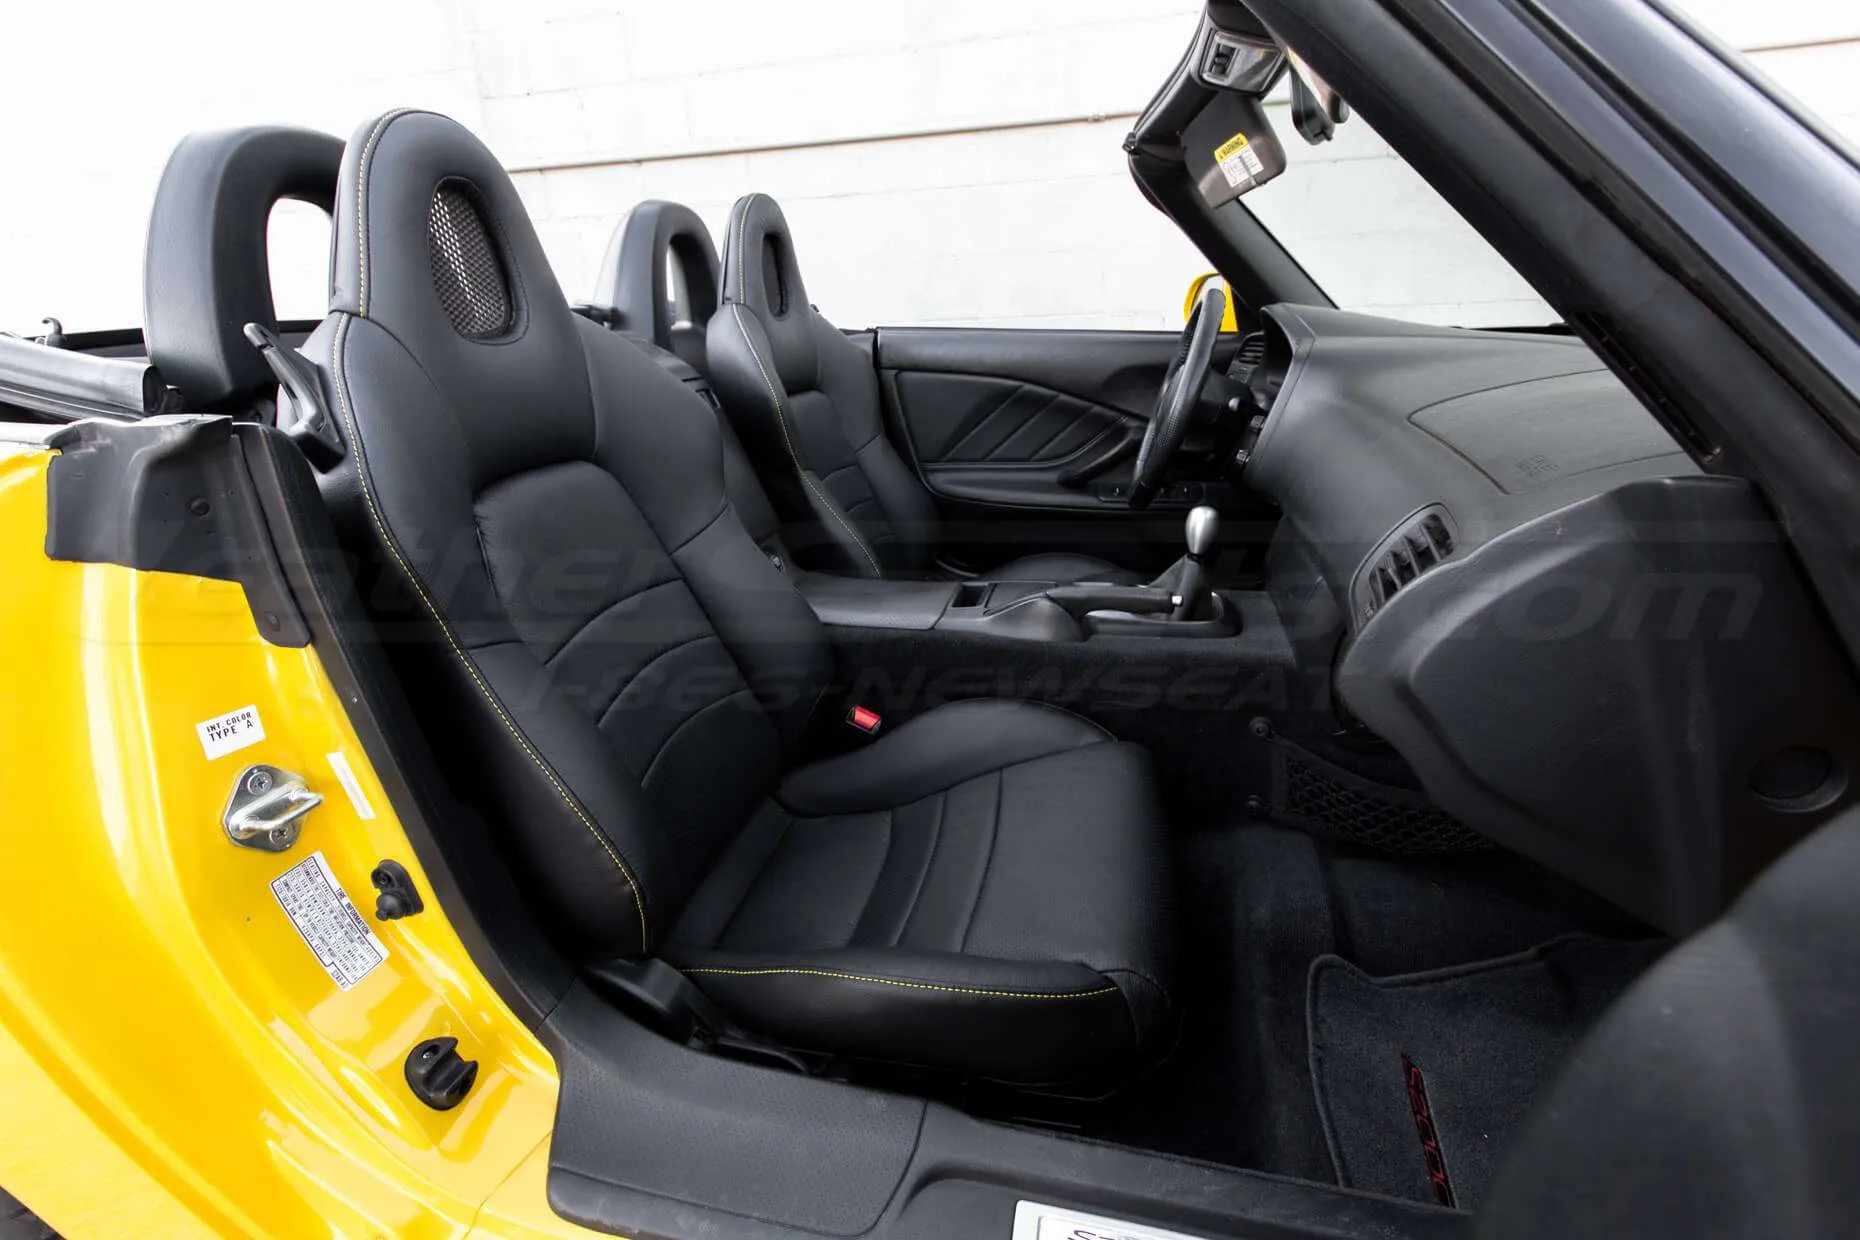 Honda S2000 Leather Upholster - Black - Front passenger side - wide angle